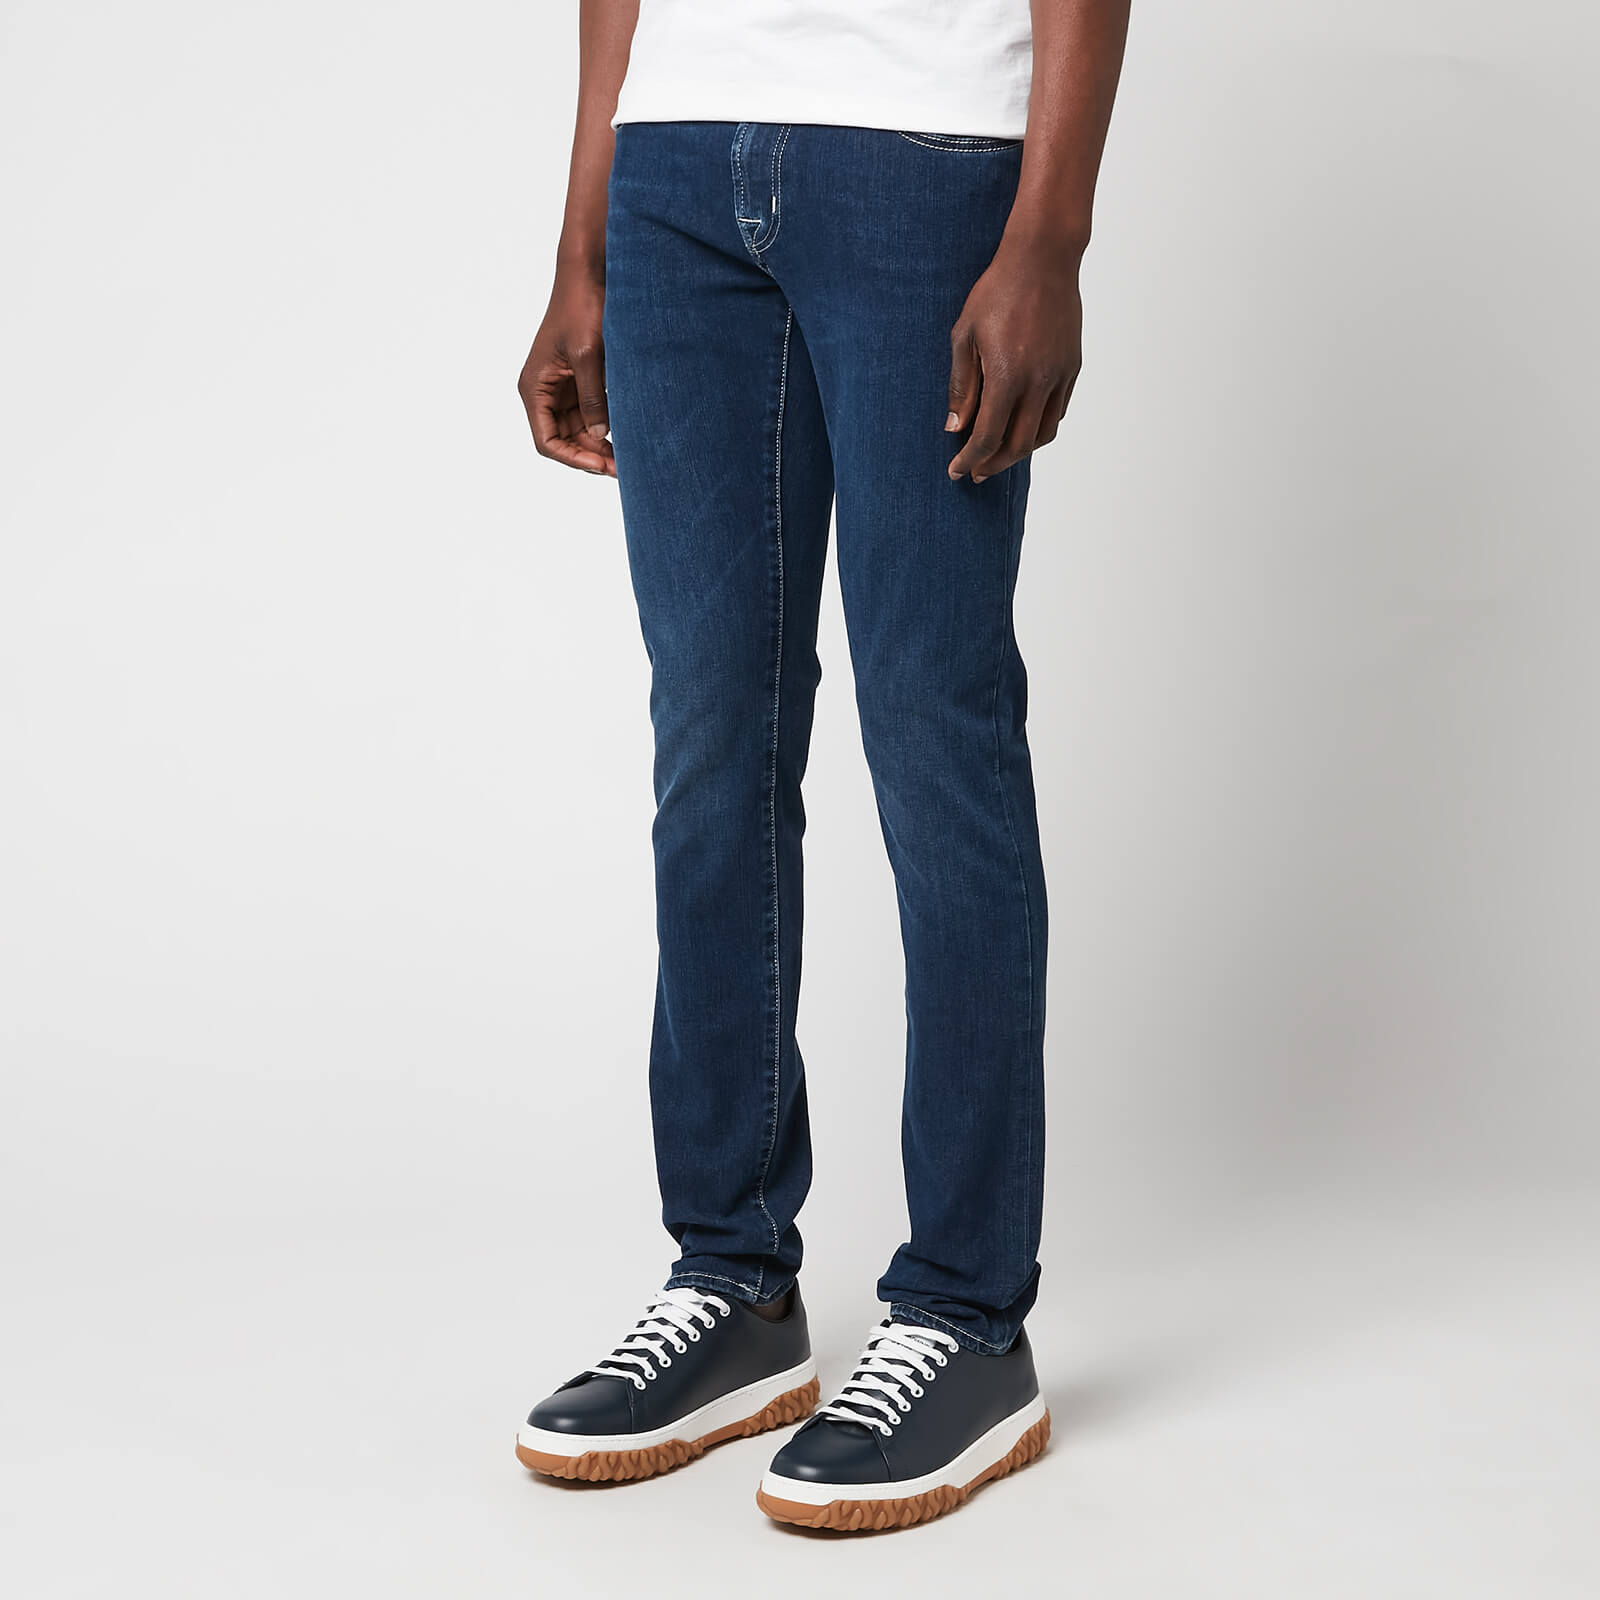 Tramarossa Men's Leonardo Slim Denim Jeans - Wash 5 - W34